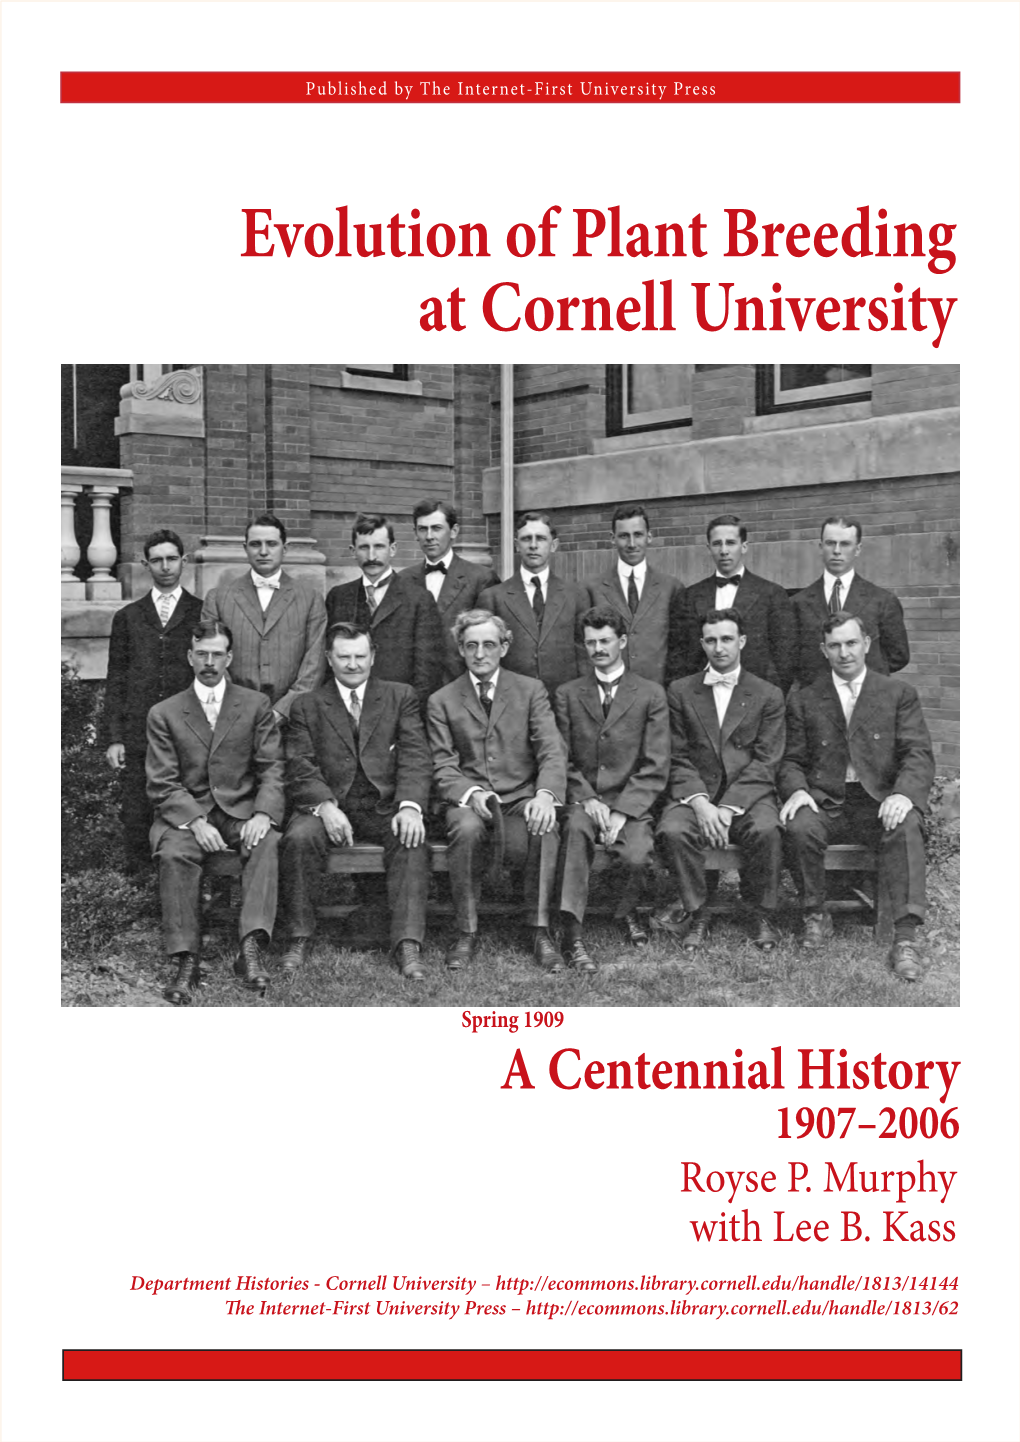 Evolution of Plant Breeding at Cornell University